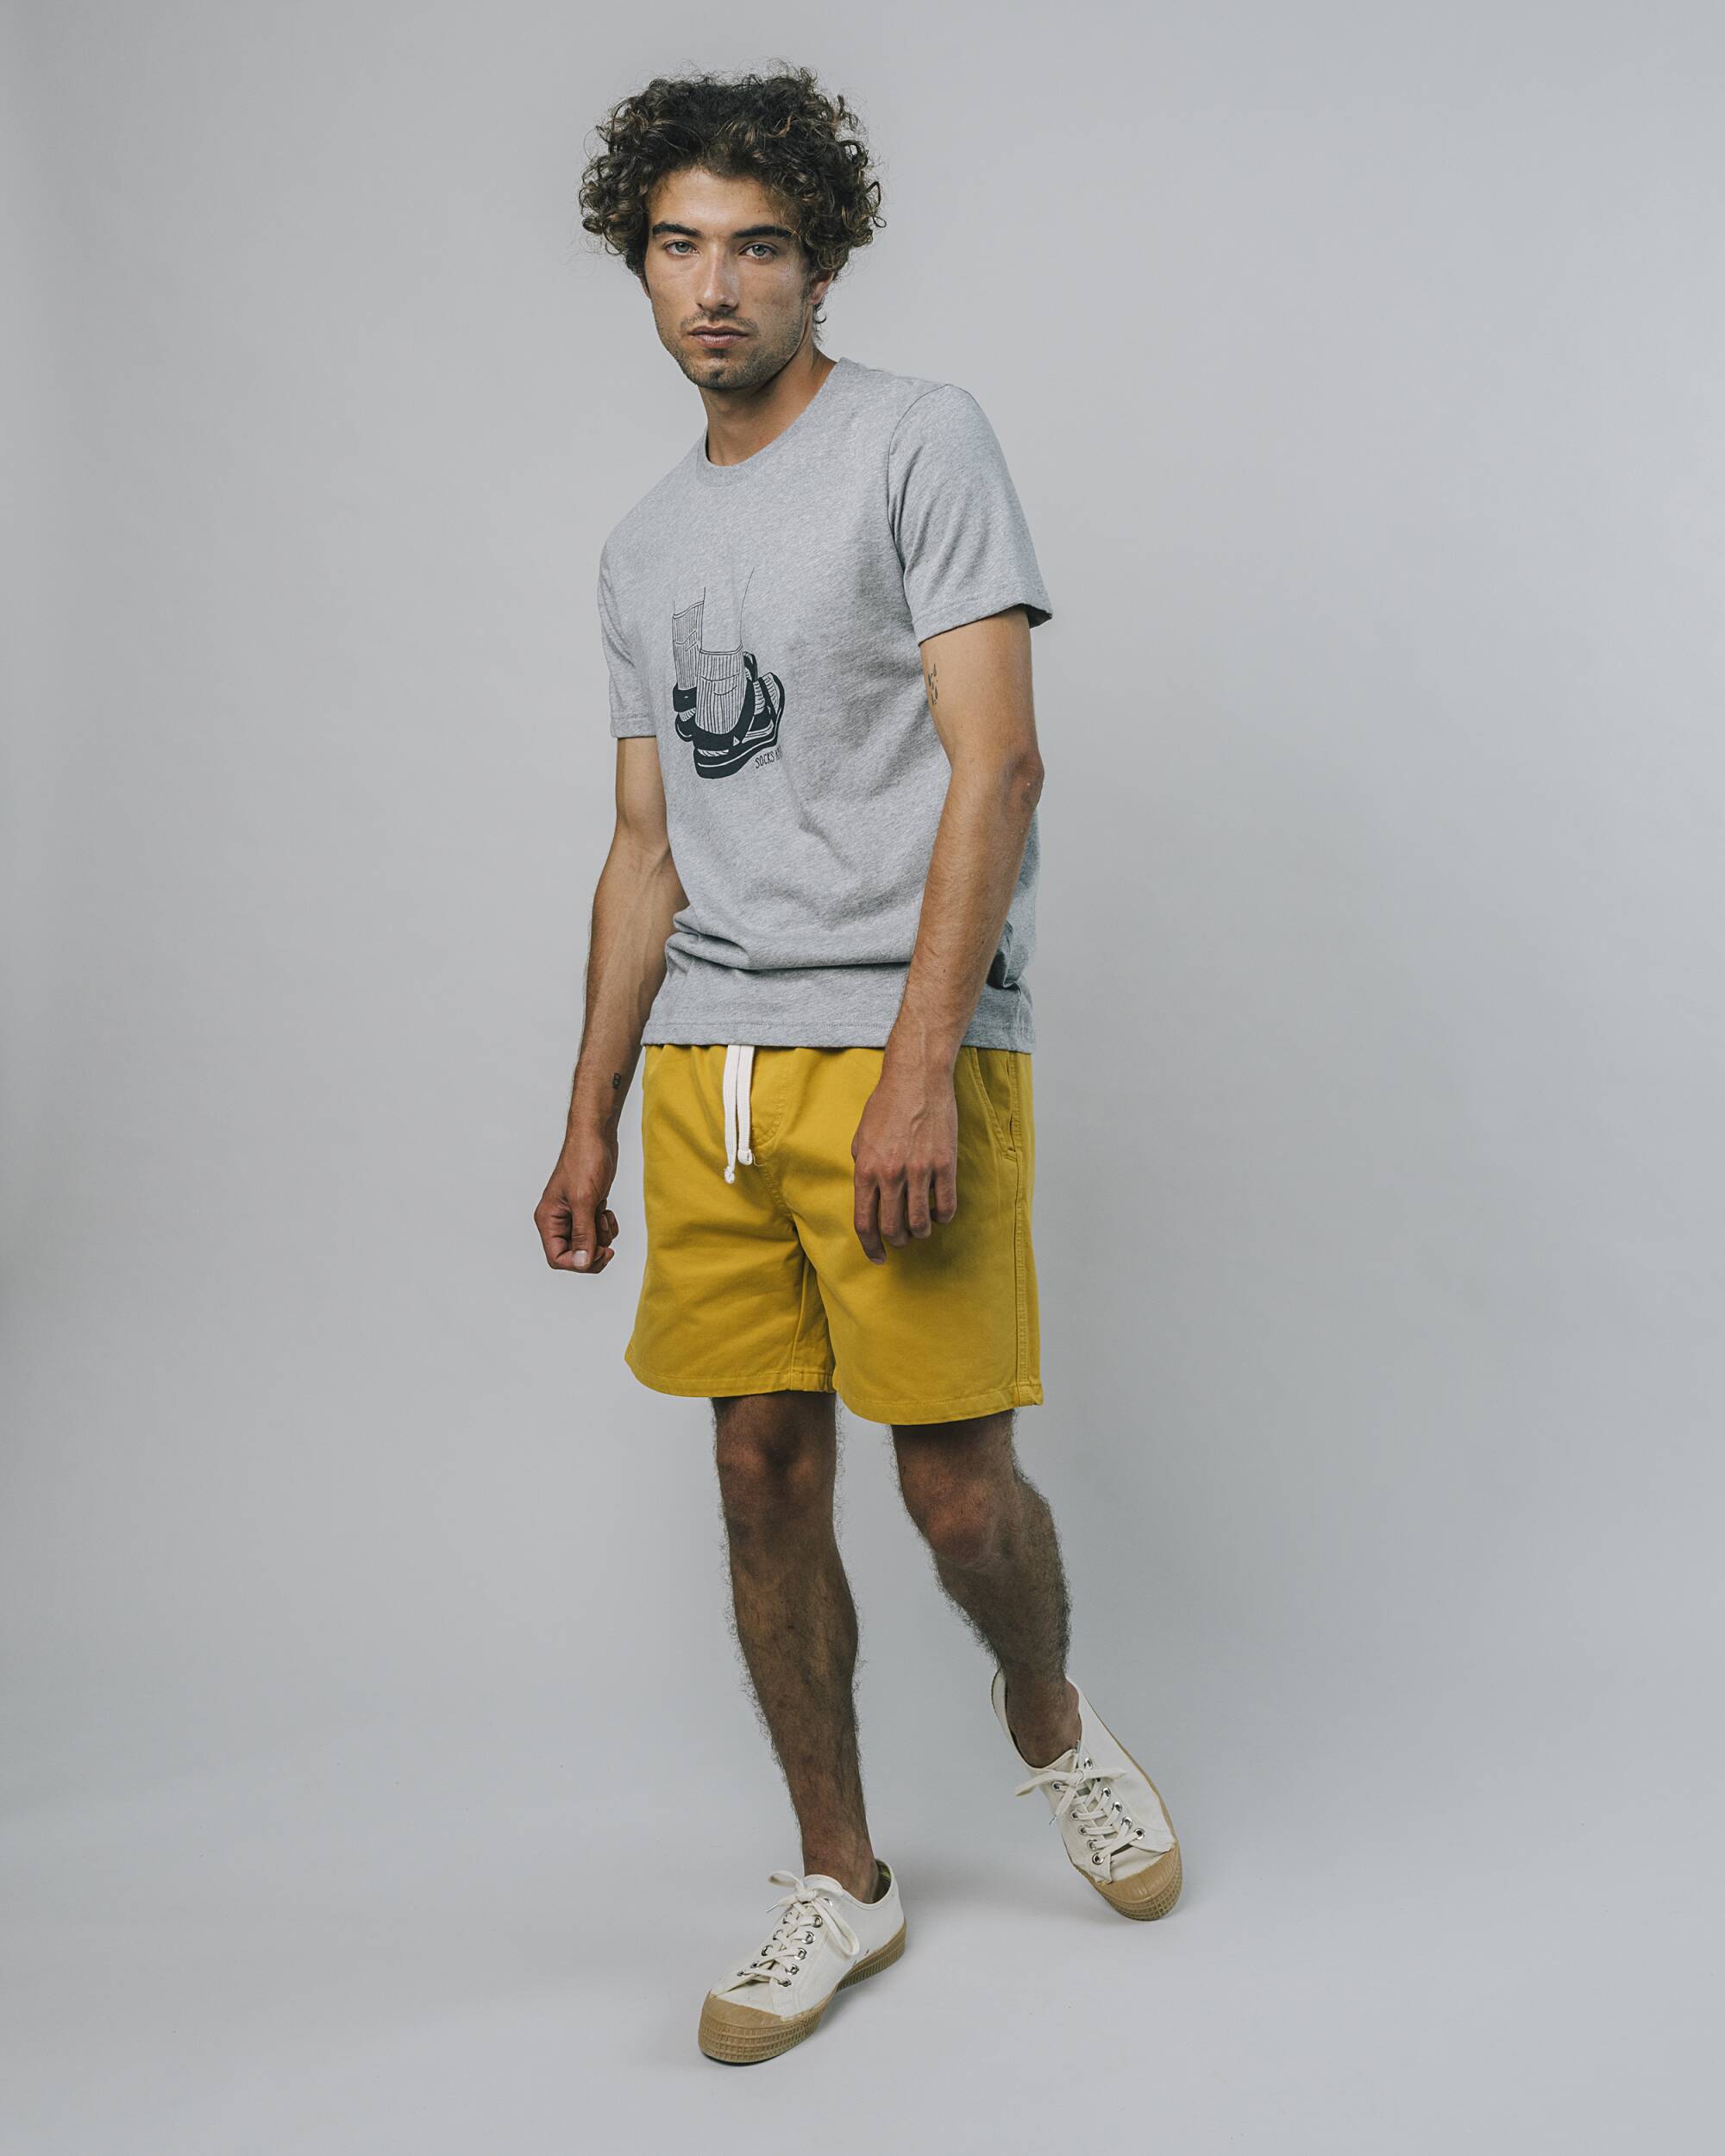 Yellow Narciso shorts made from 100% organic cotton from Brava Fabrics